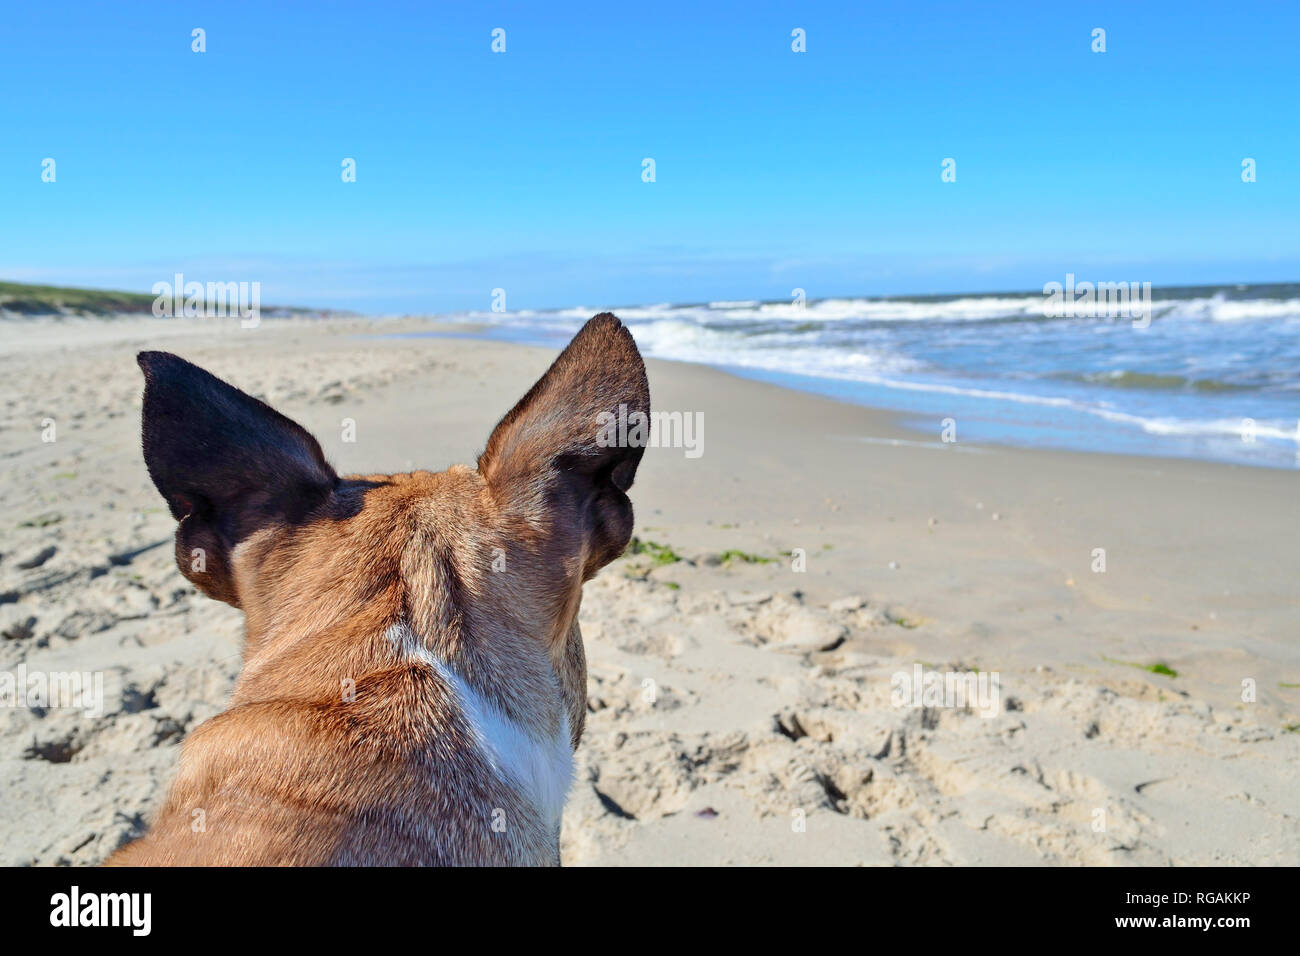 french bulldog pointy ears